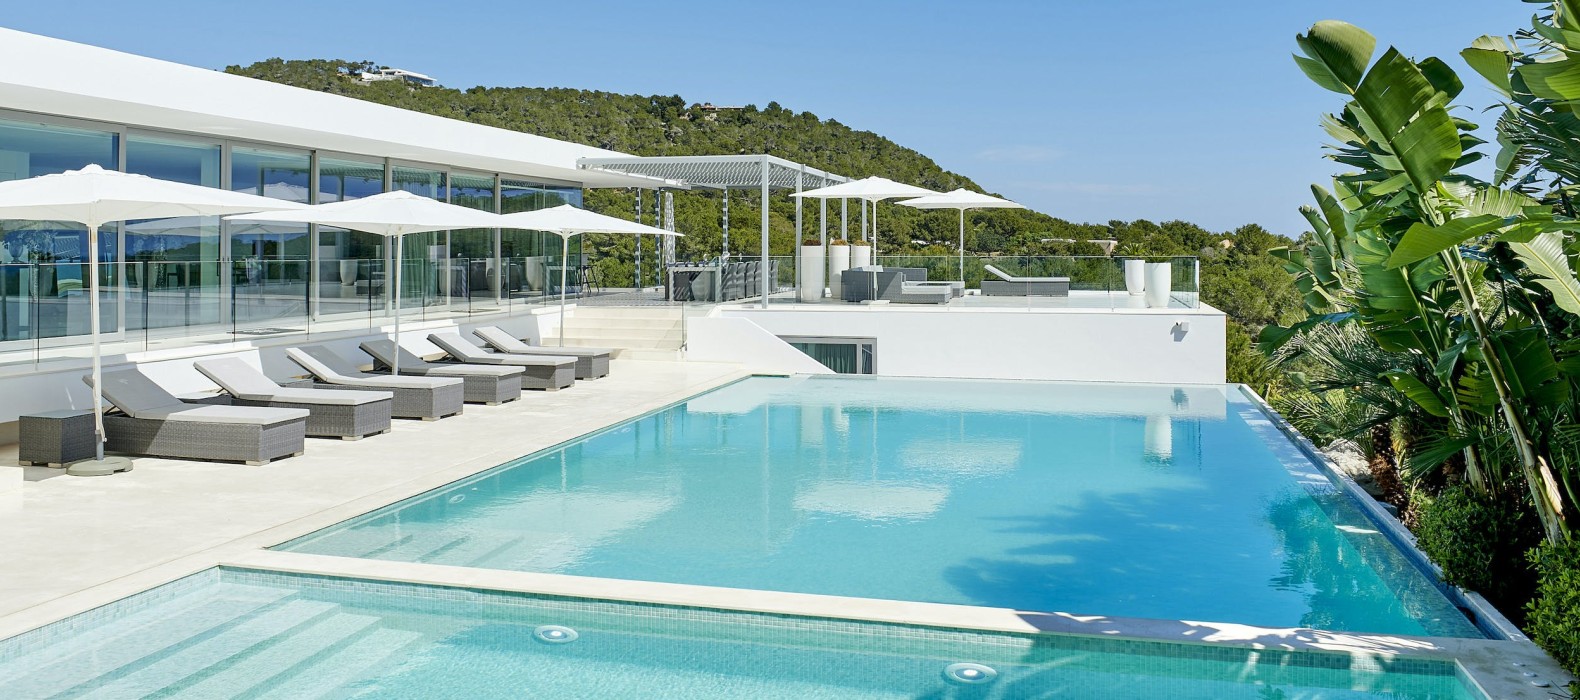 Exterior villa with pool of Villa La Colina in Ibiza